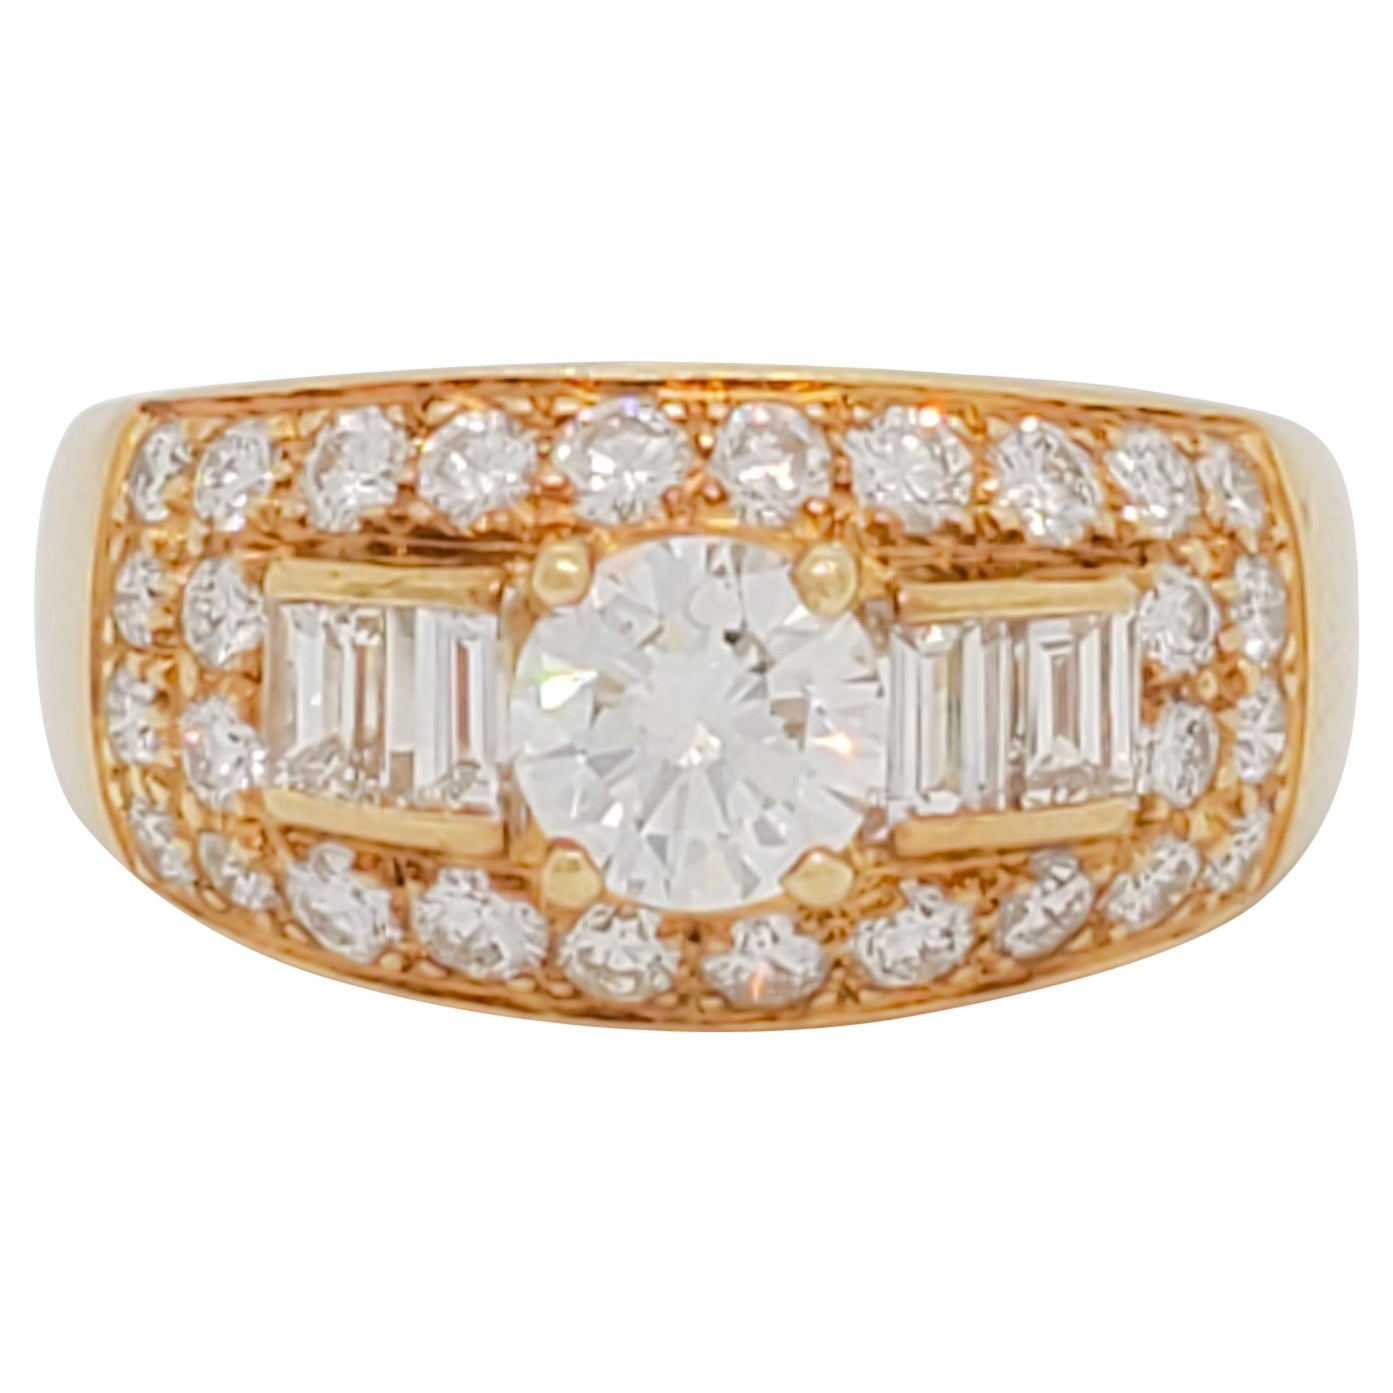 Estate Bulgari White Diamond Ring in 18k Yellow Gold